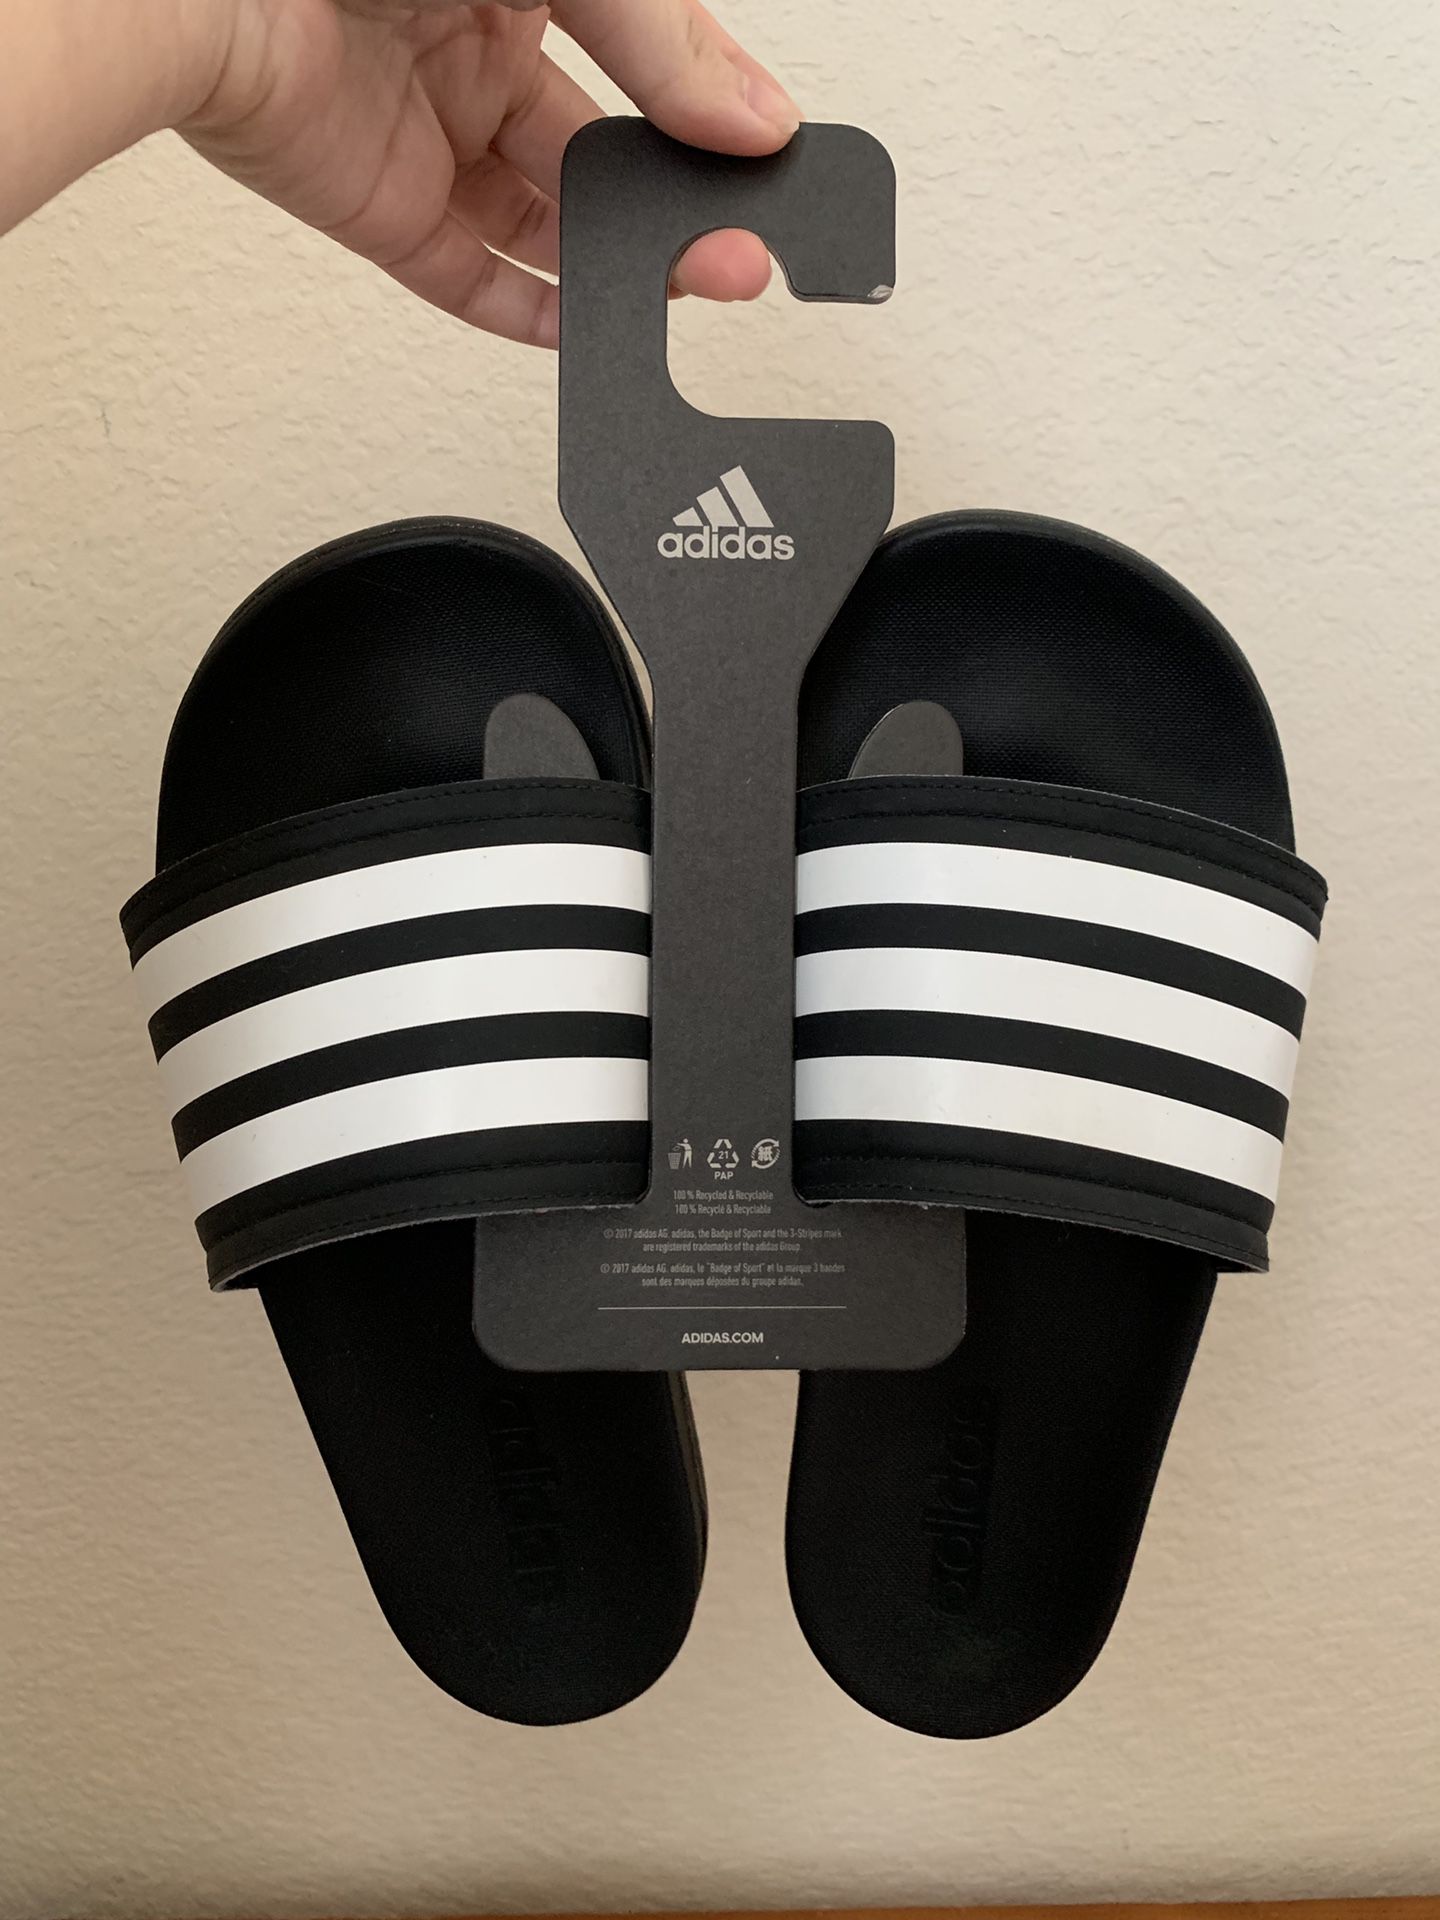 Adidas Slides Sandals